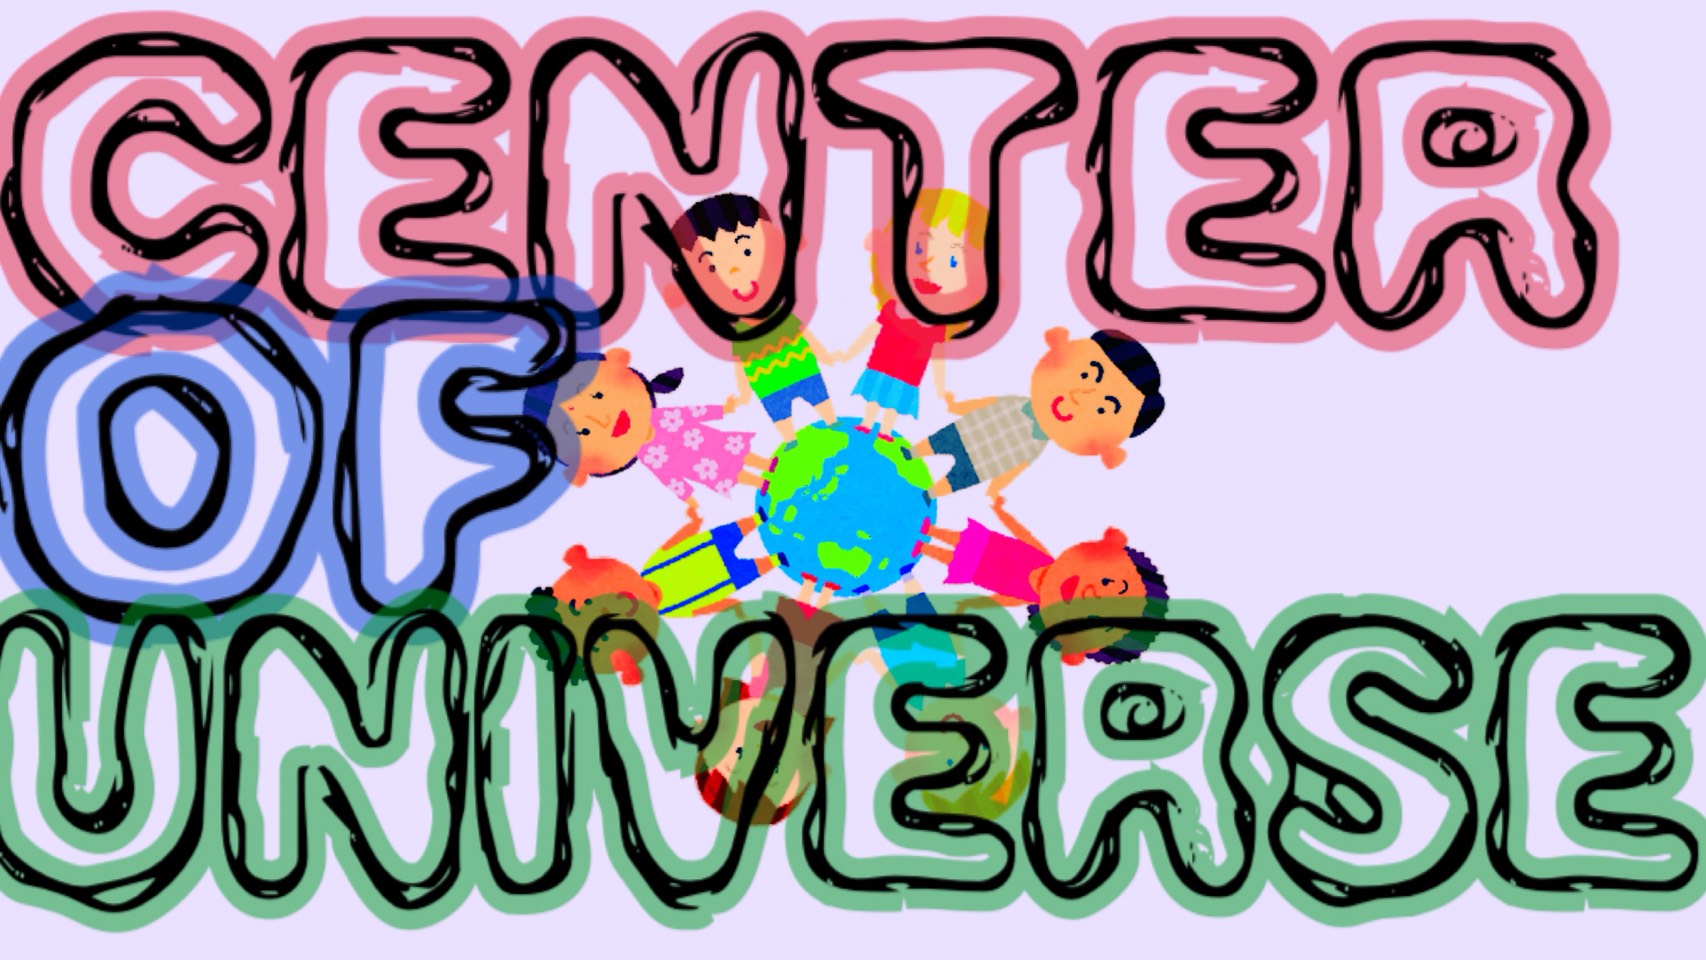 「CENTER OF UNIVERSE」のイメージ